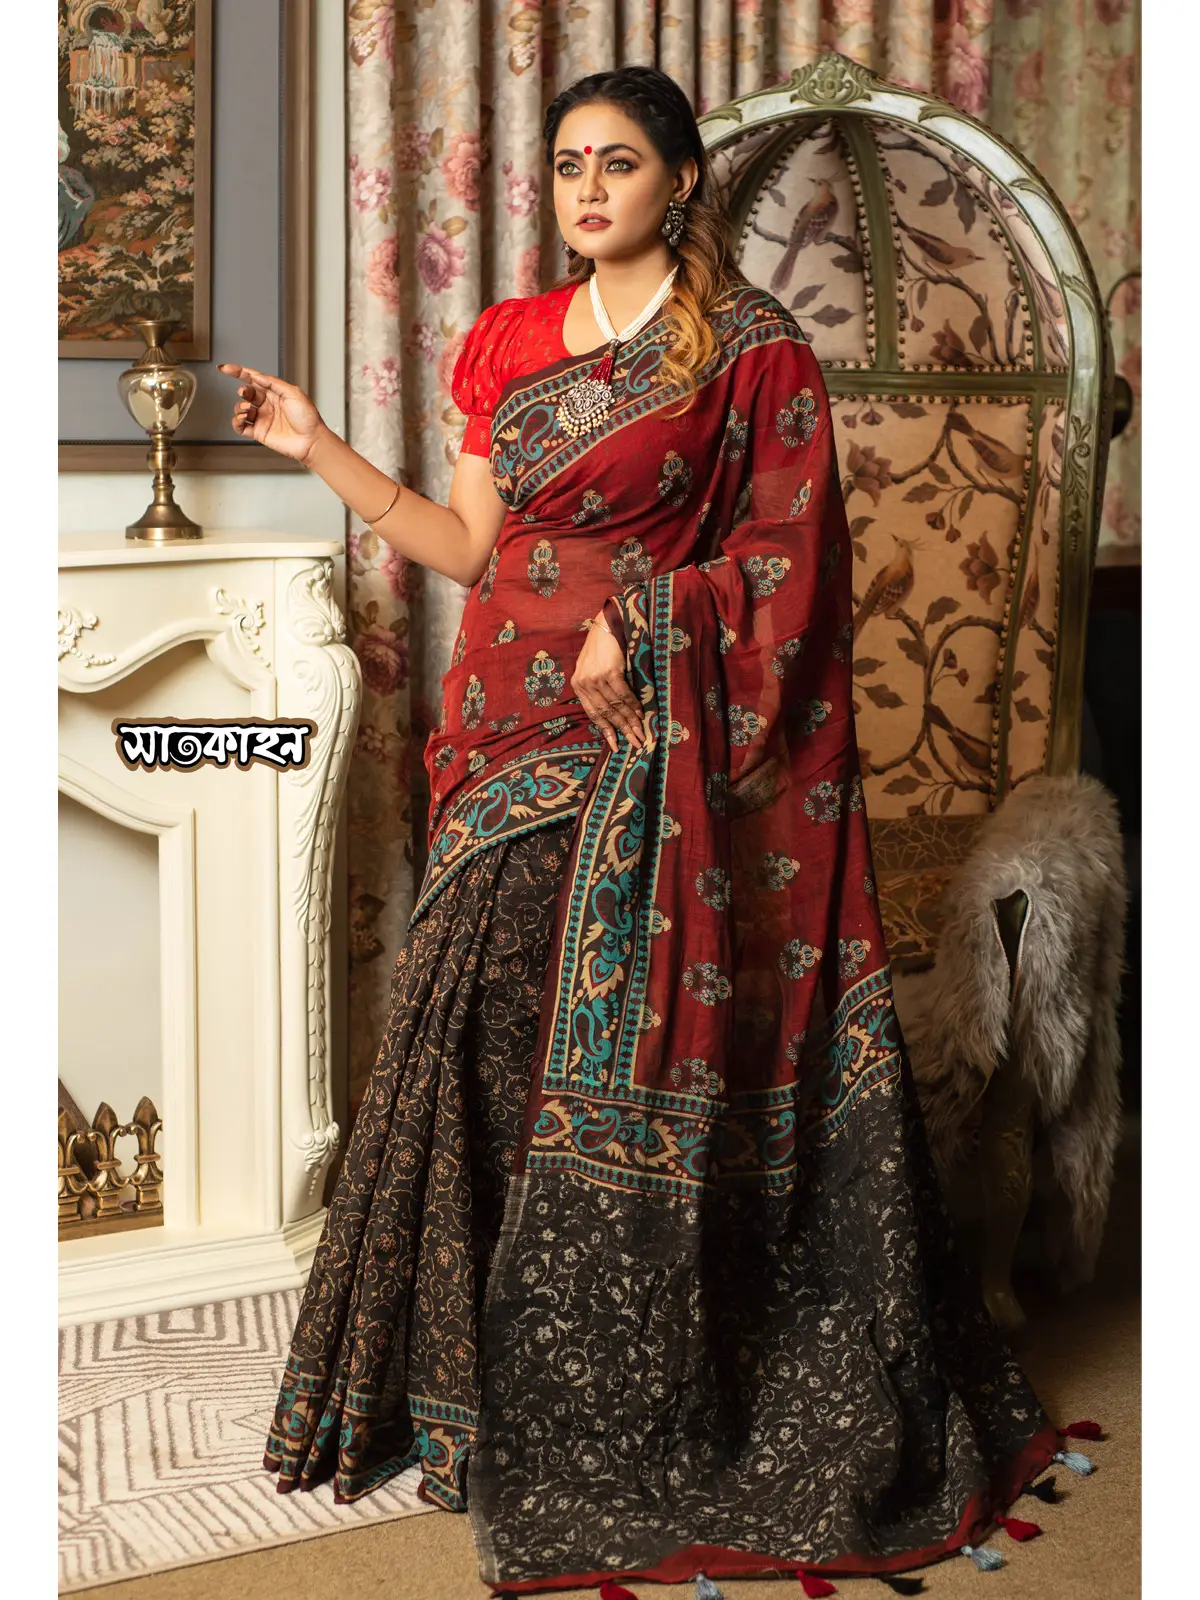 Gorgeous high quality cotton sarees screen printed work. 